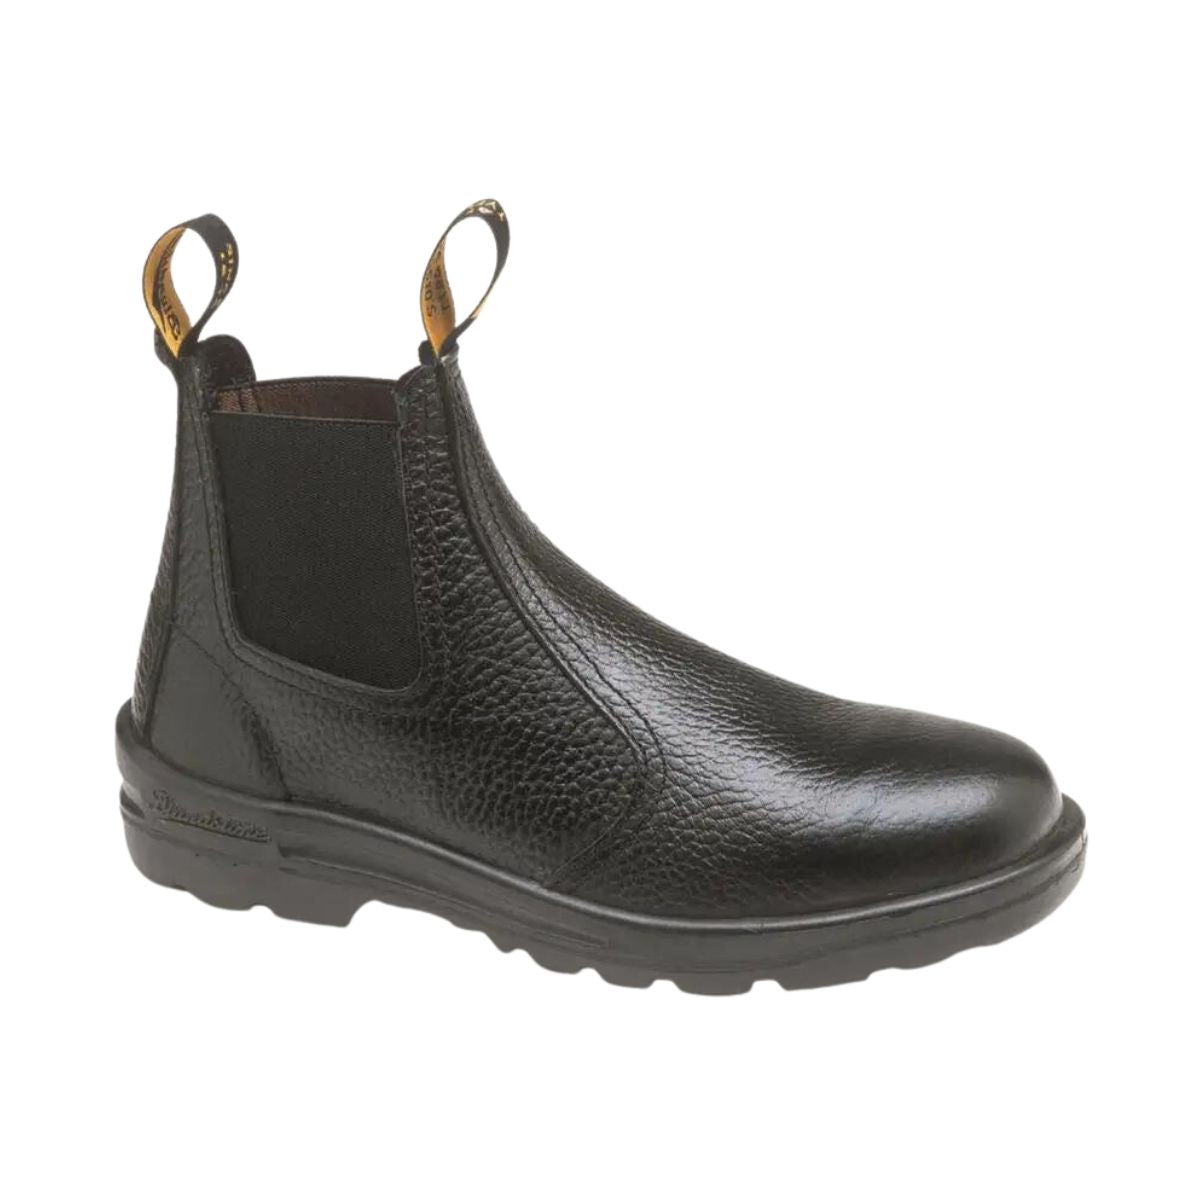 Blundstone Unisex Elastic Sided Leather Safety Boots #330 Size 9, 12